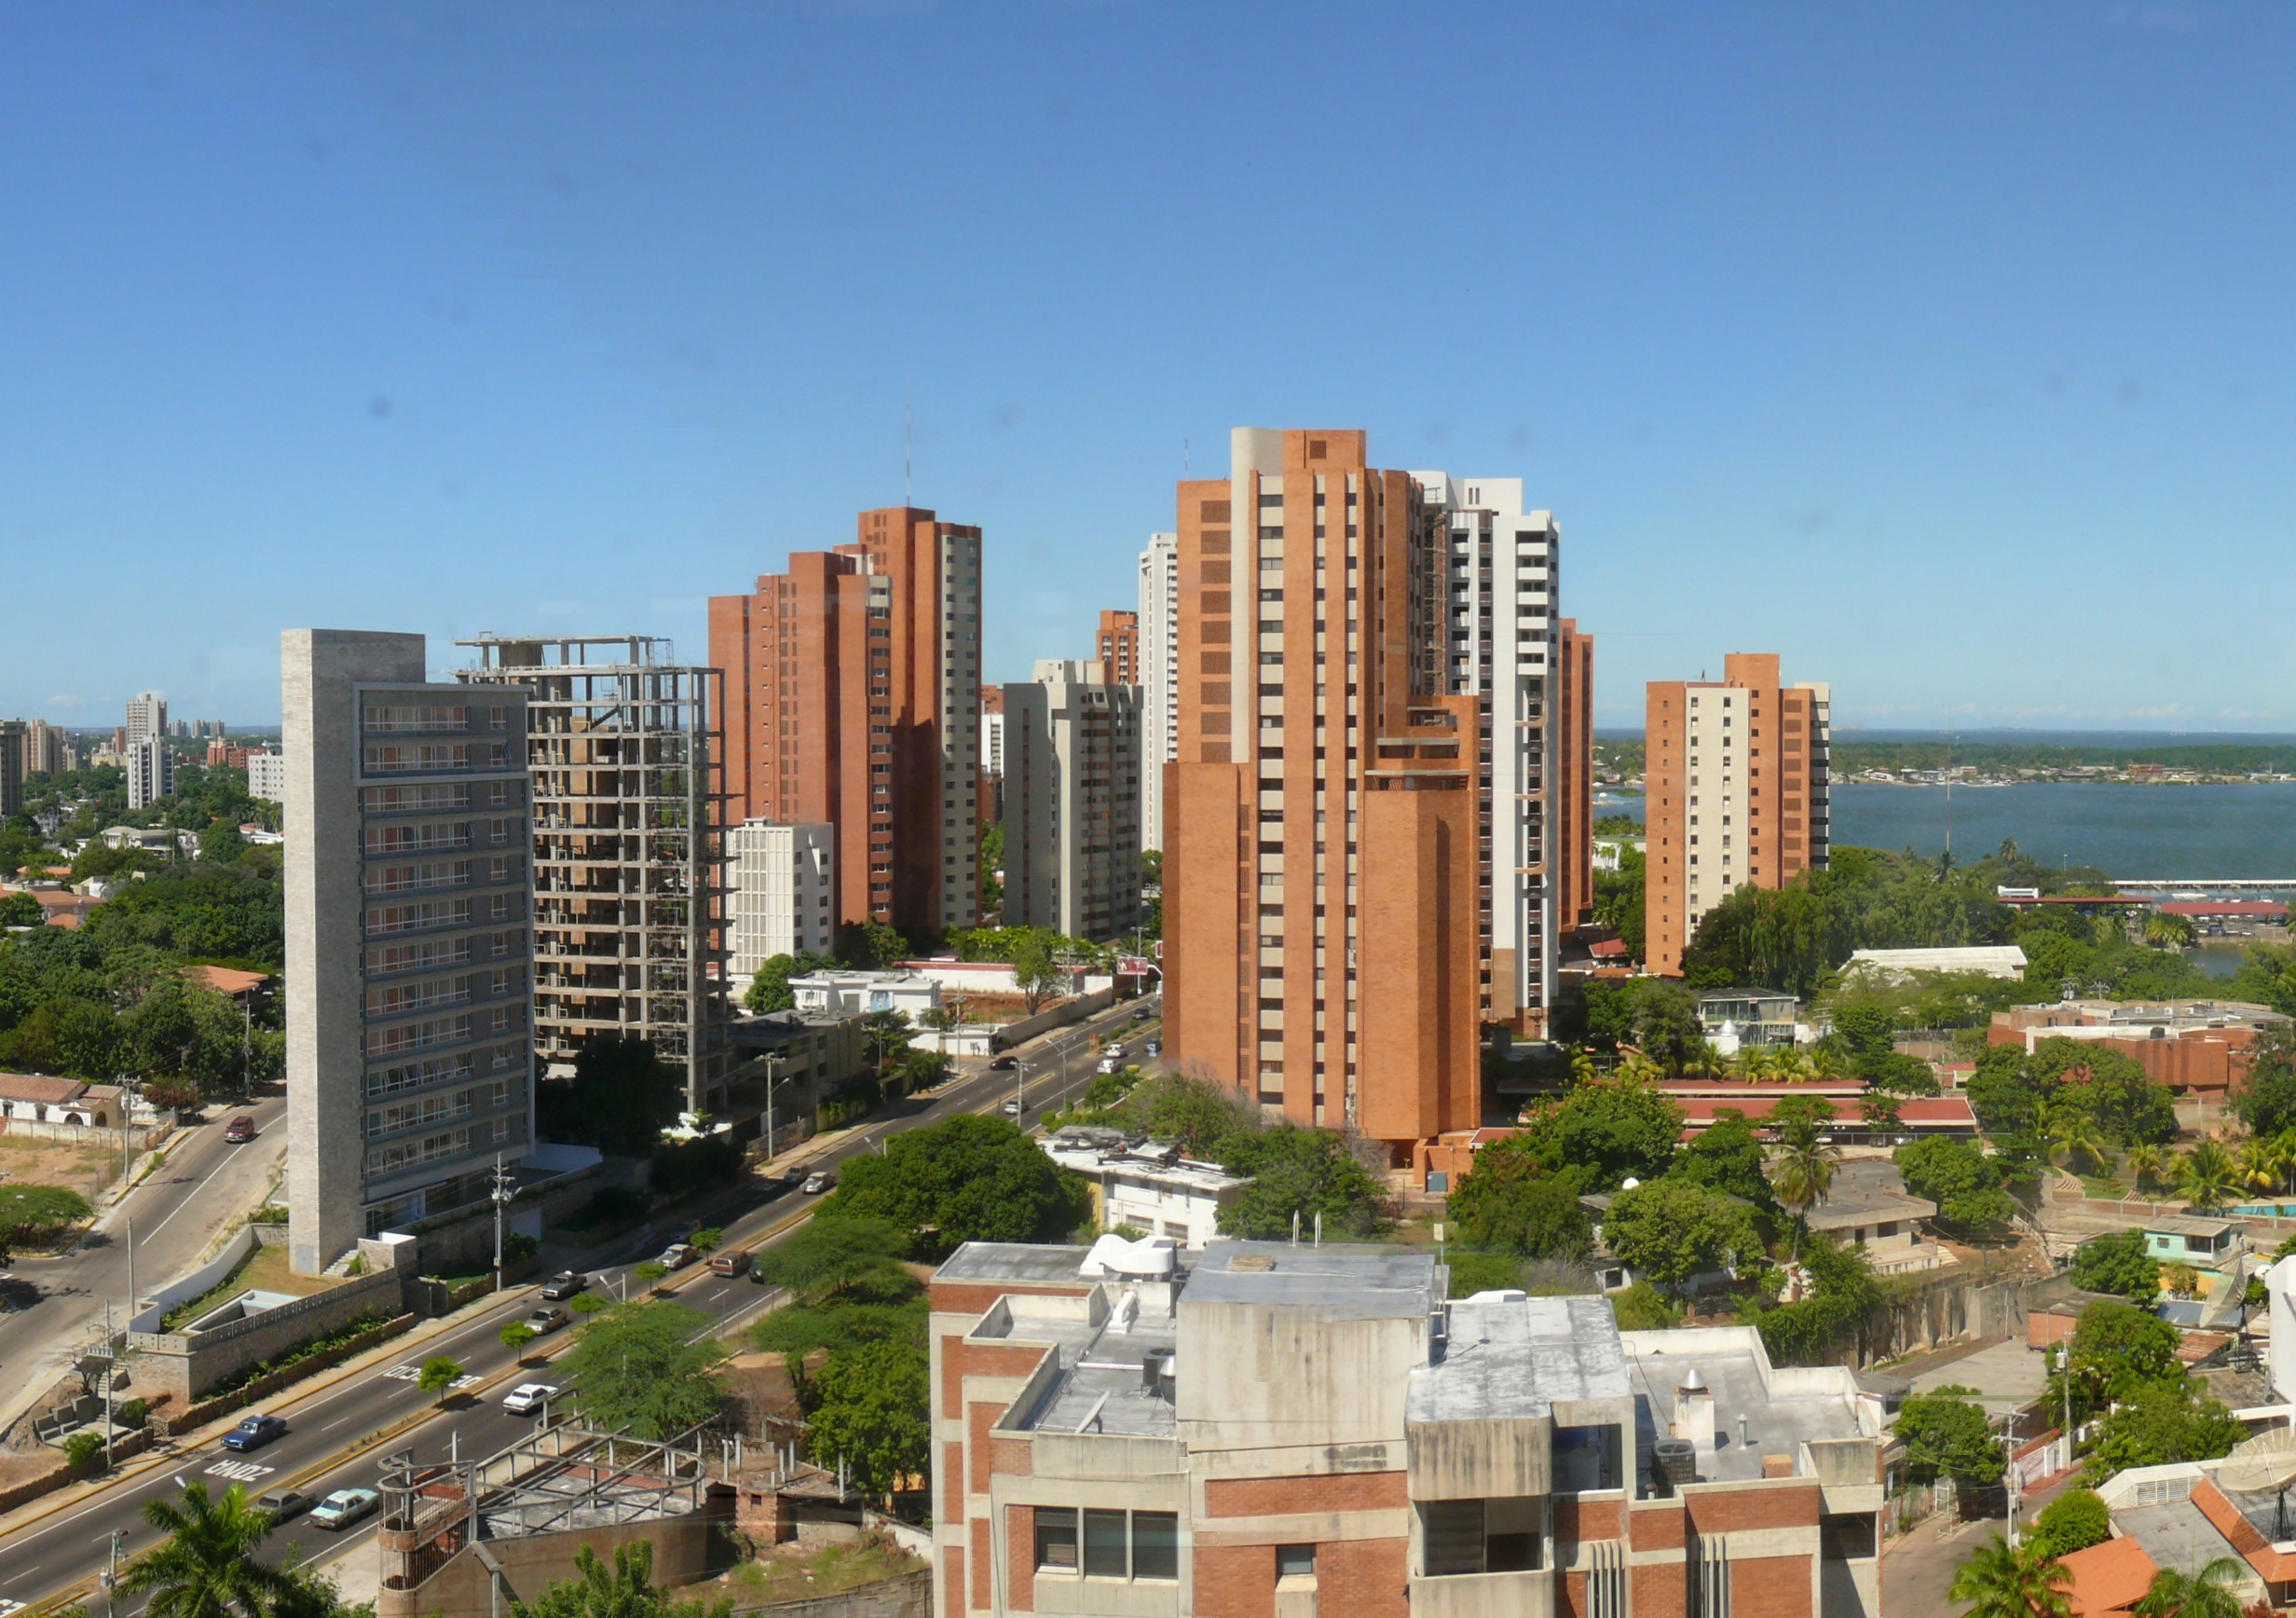 File:Vista de Maracaibo.png - Wikimedia Commons